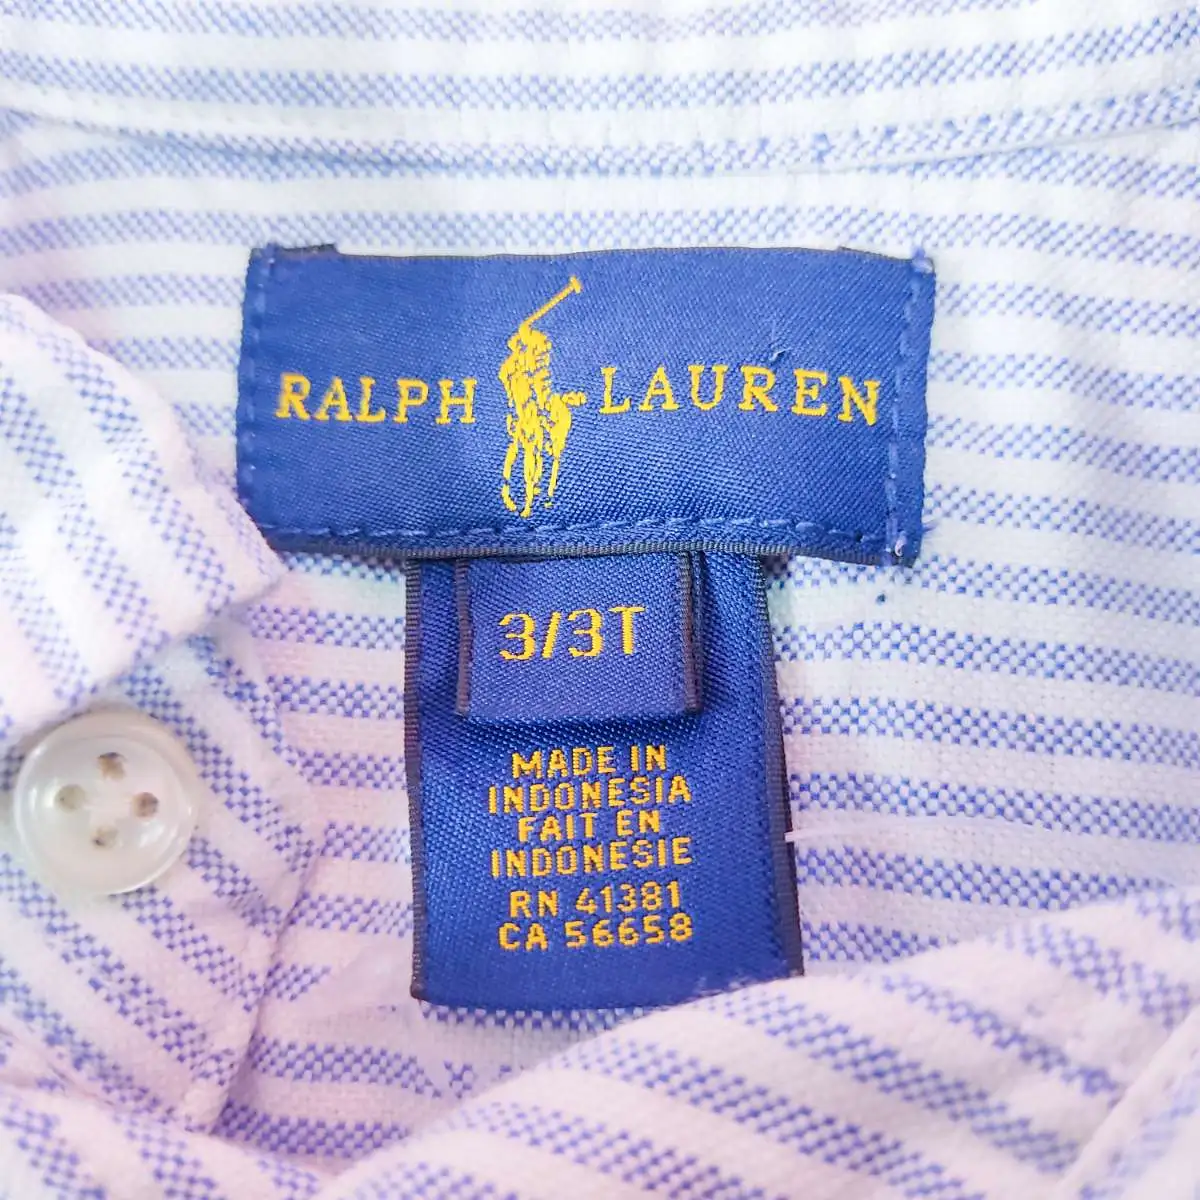 RALPH LAUREN เสื้อเชิ้ตแขนยาวลายทางสีน้ำเงิน,ขาว 3/3T 